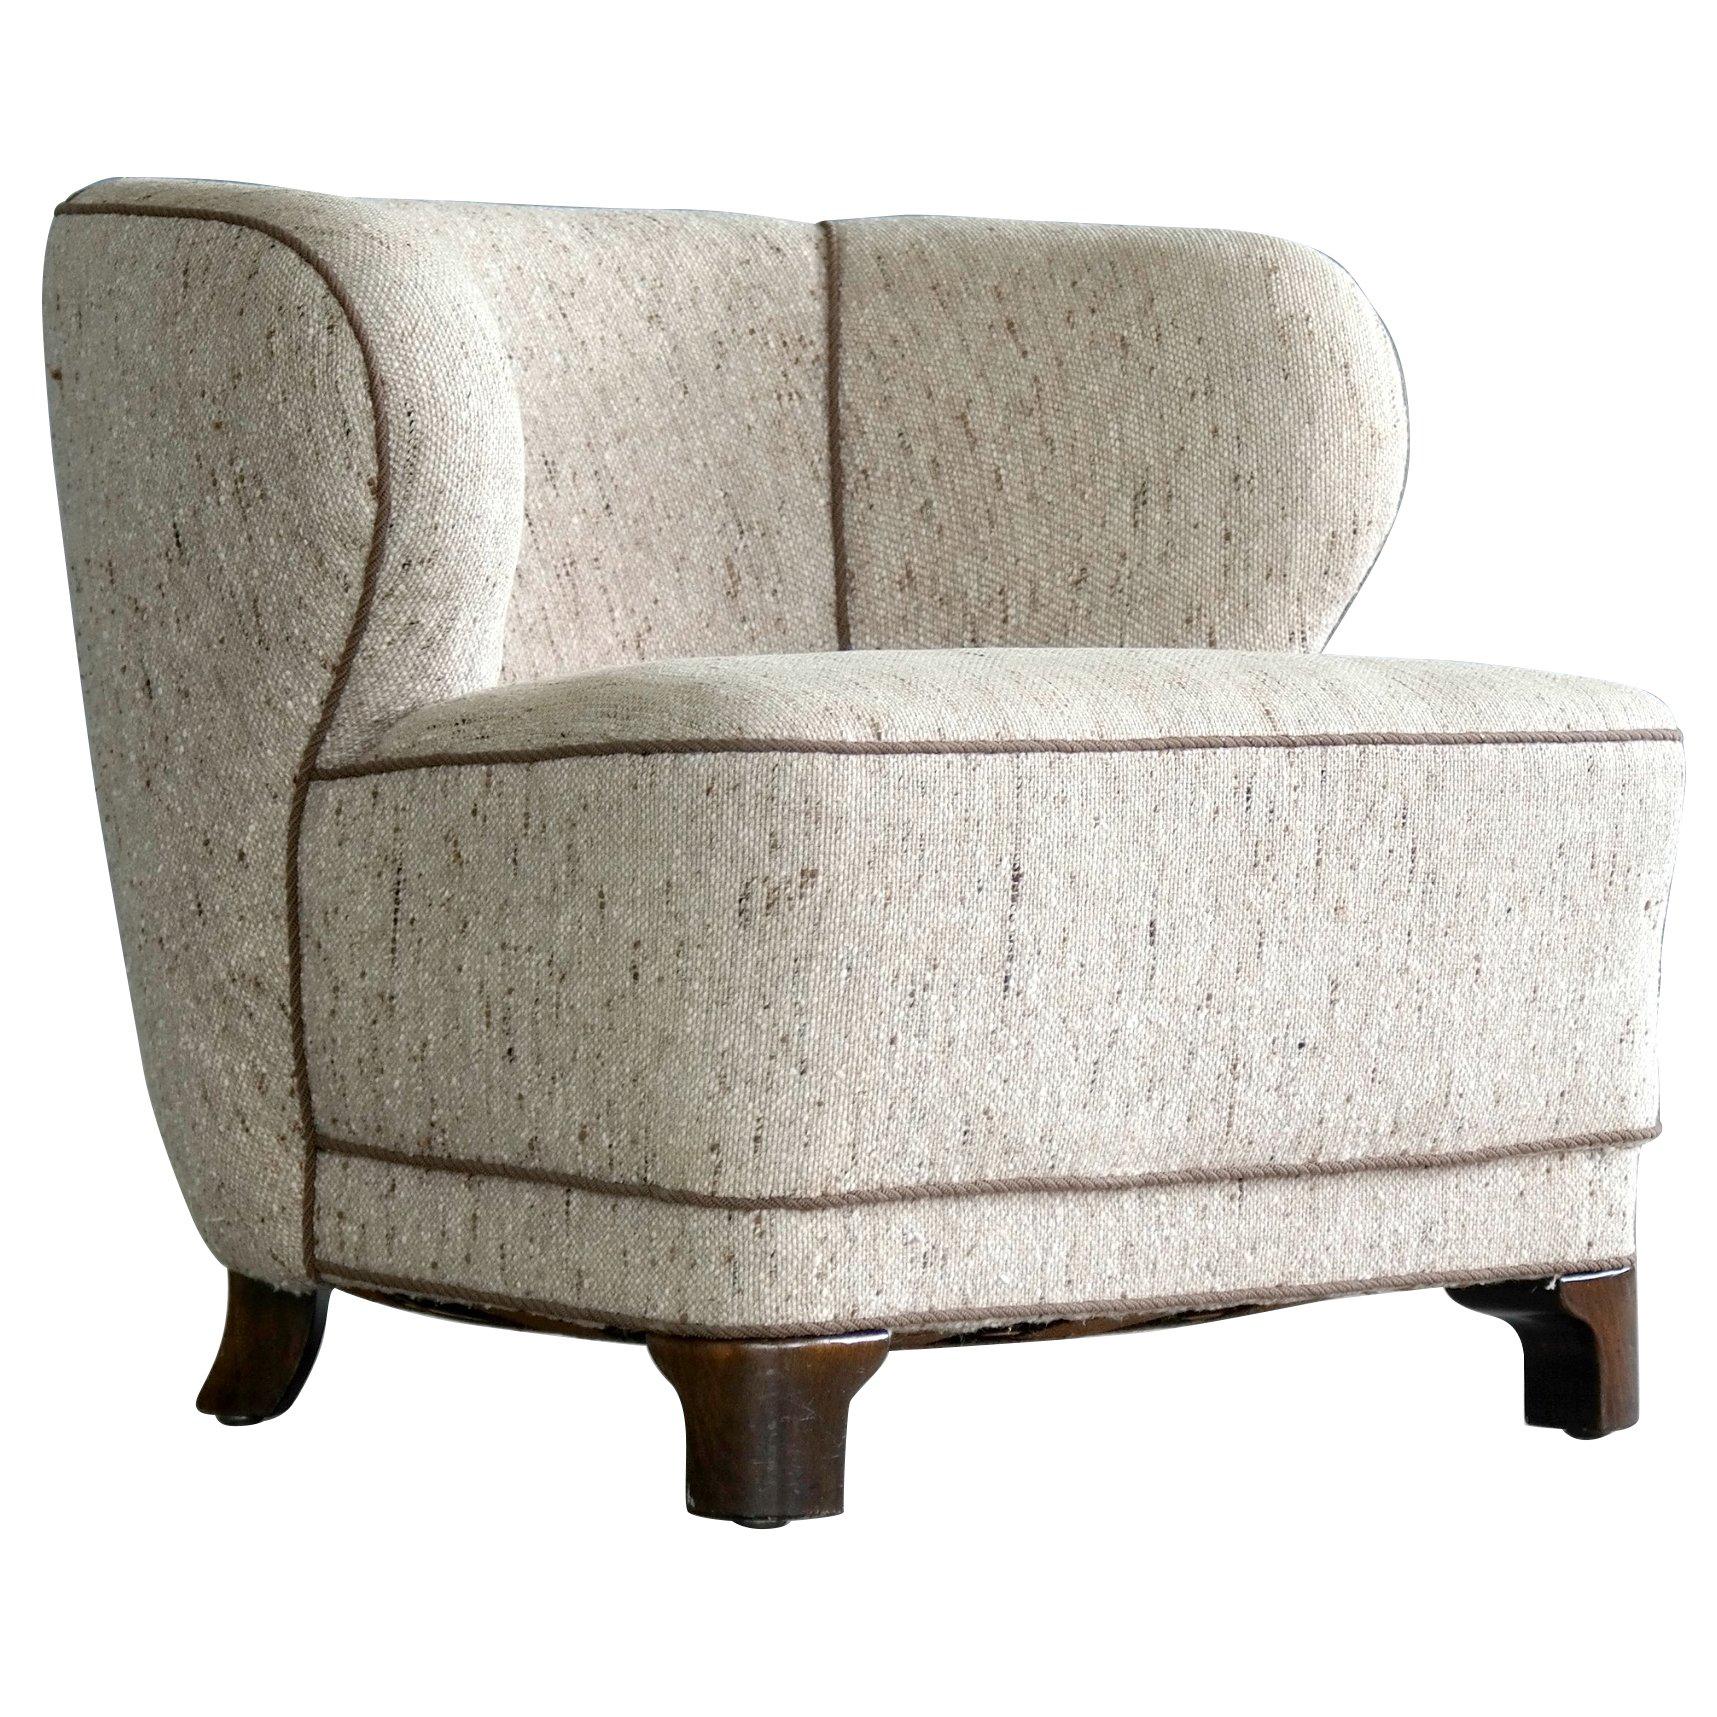 Viggo Boesen Attributed Lounge Chair, 1940s Danish, Midcentury